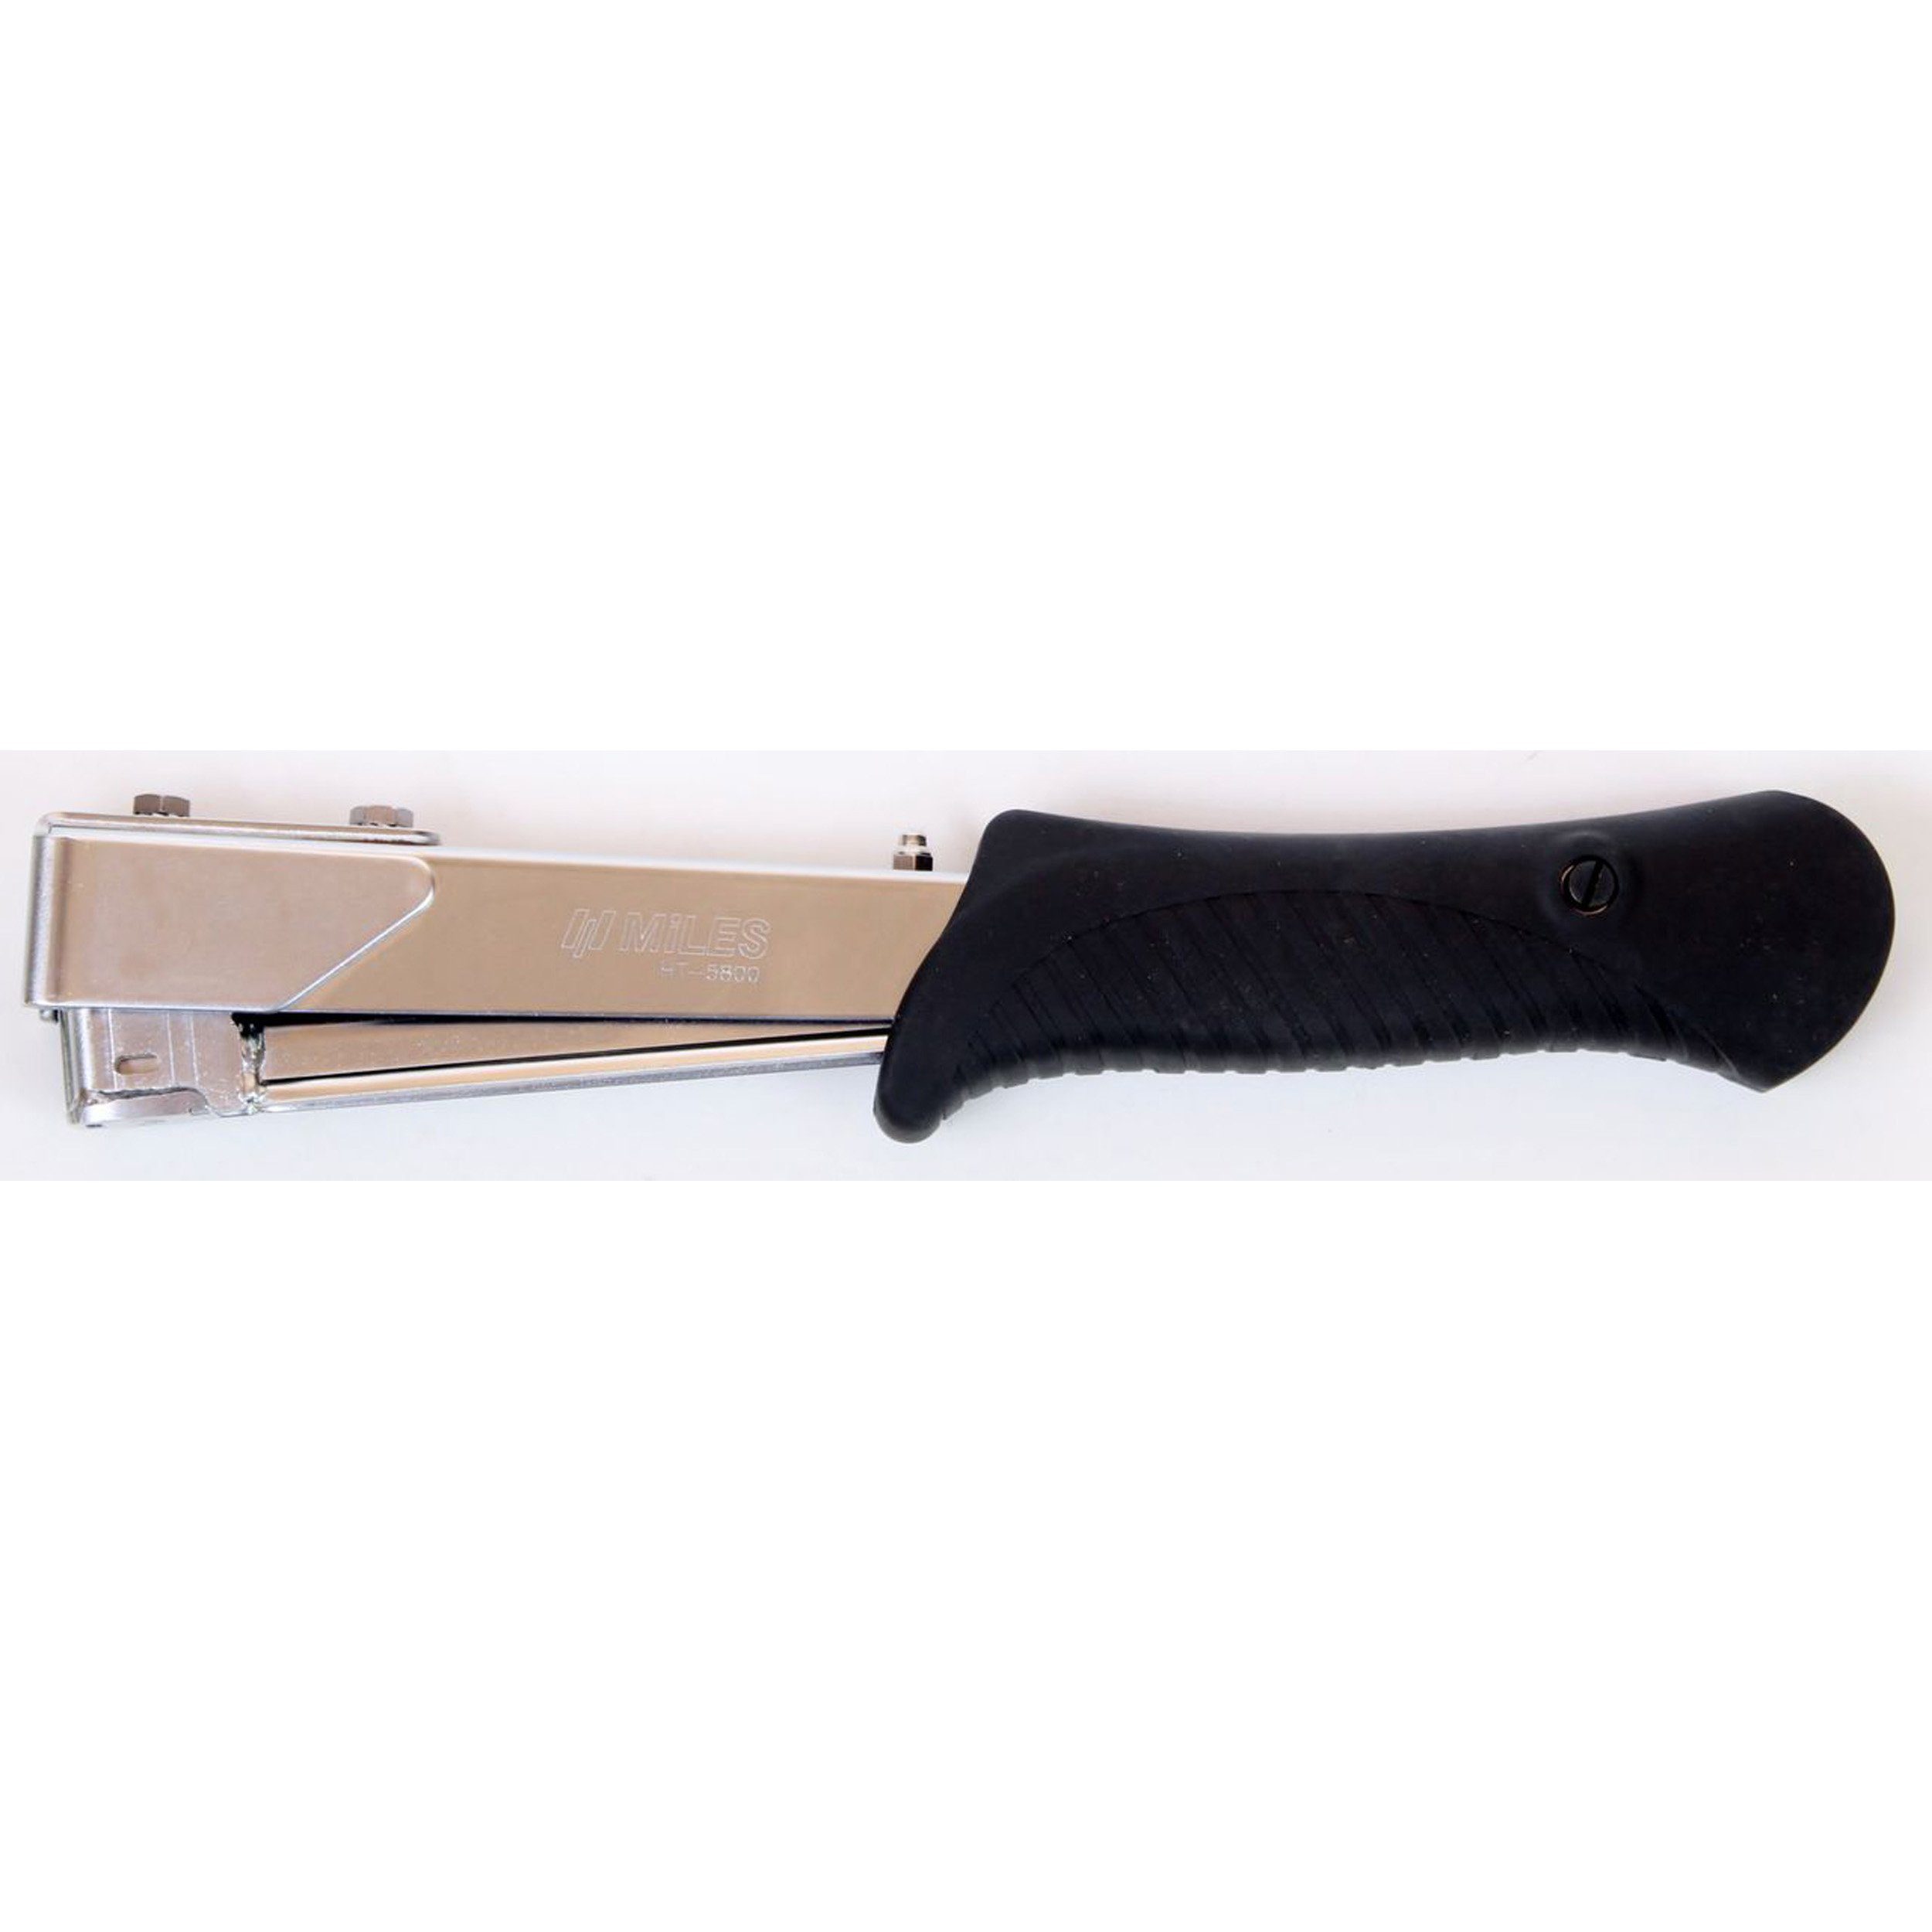 myMAW Handtacker MILES Hammer-Tacker HT-5800/Z Werkzeug Nagler Tackern Heftklamme…